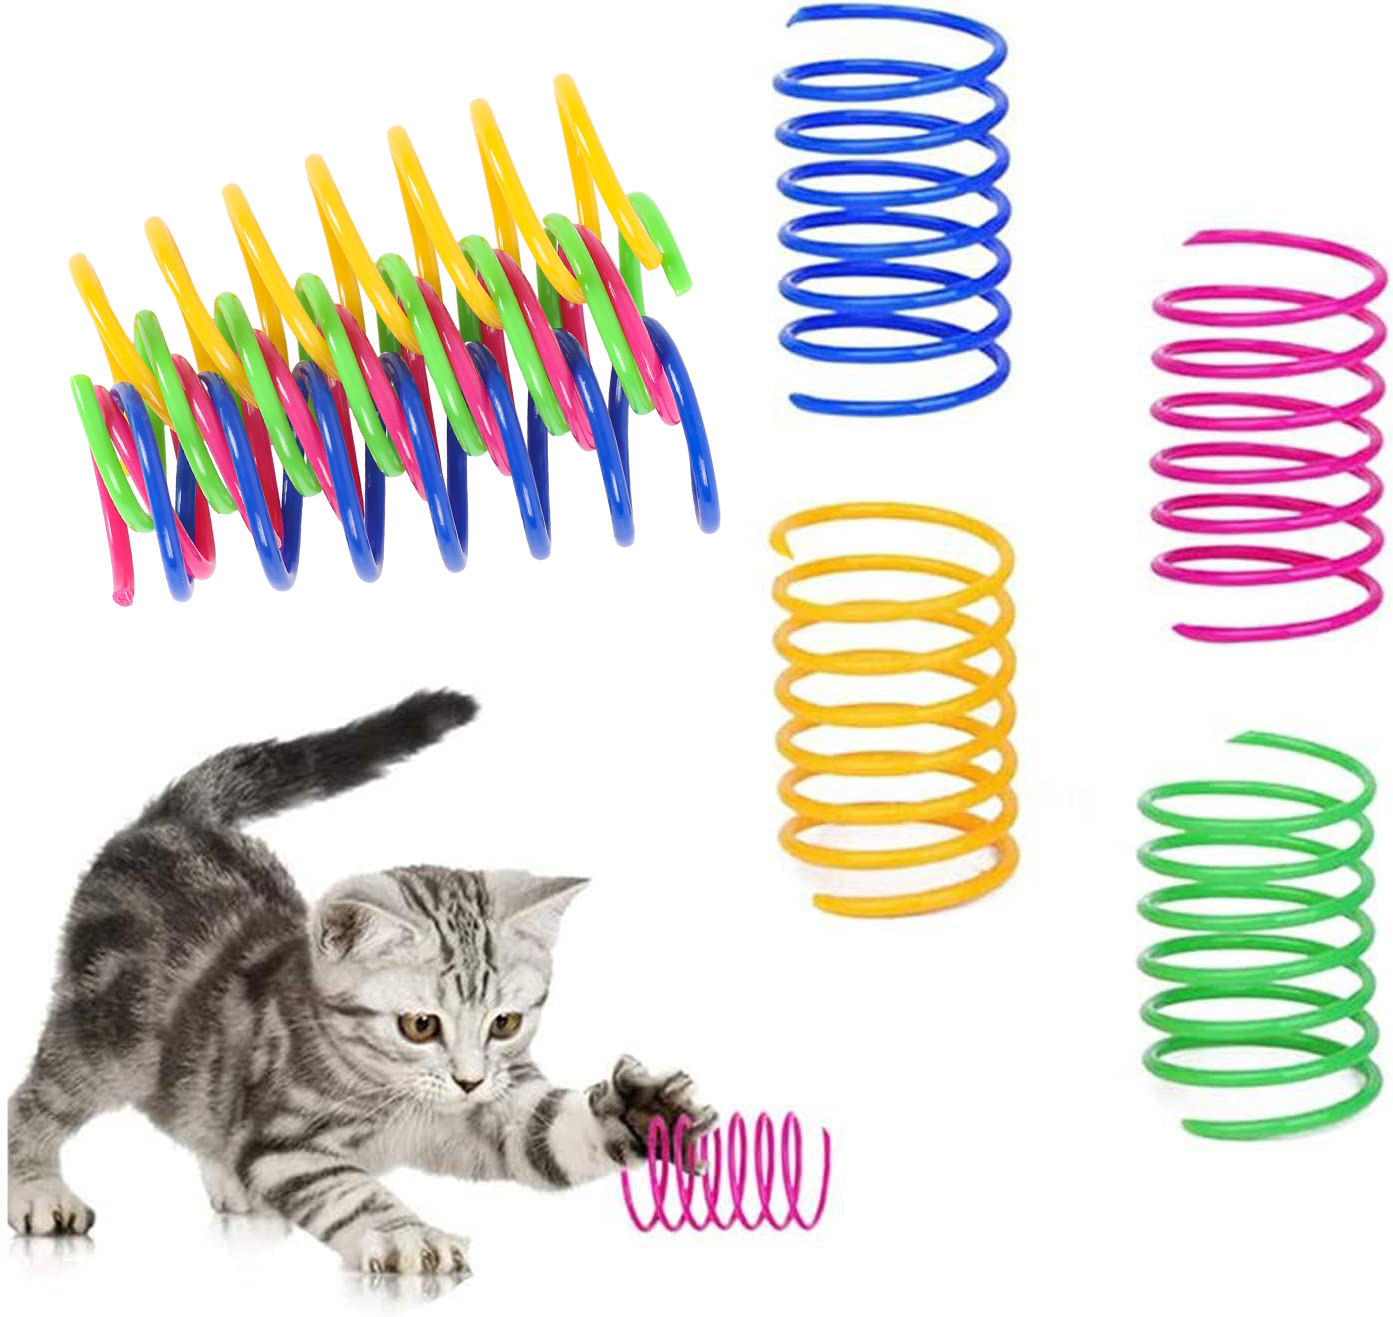 4 Fakitin Dogaran Filastik Cat Karkashe Spring Interactive Cat Toy